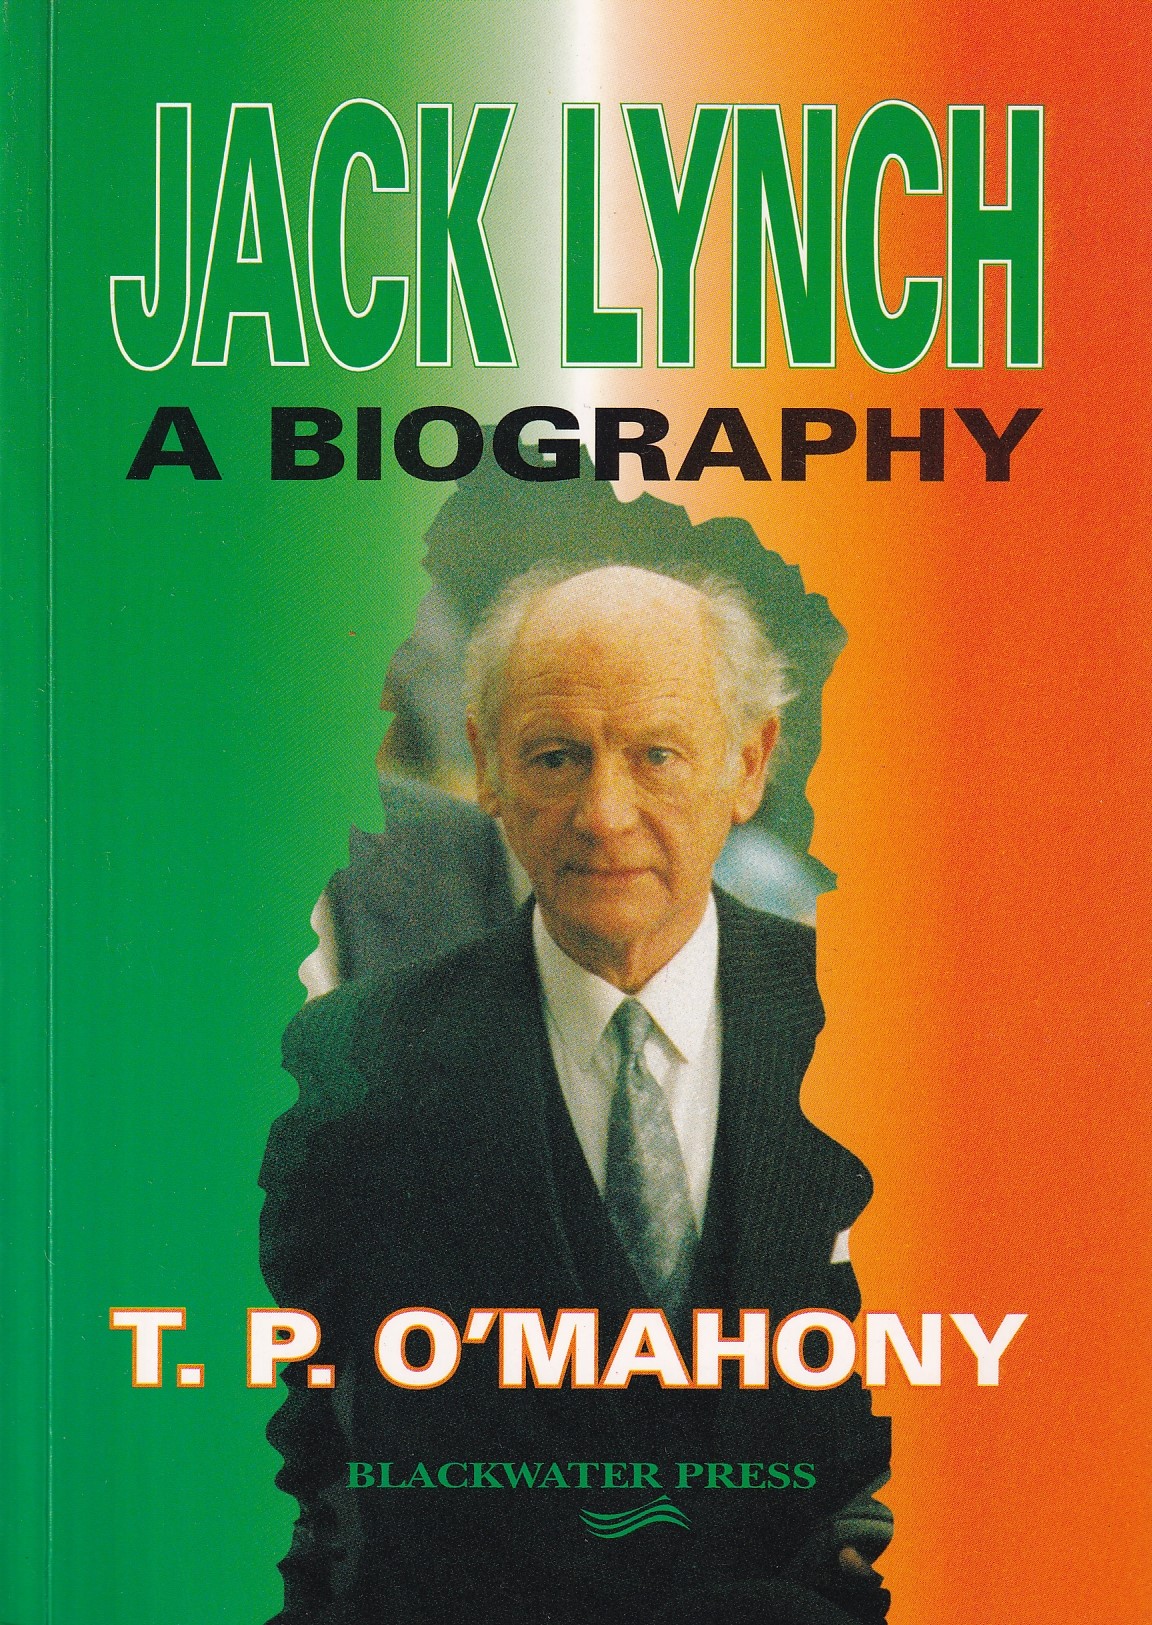 Jack Lynch: A Biography by T. P. O'Mahony